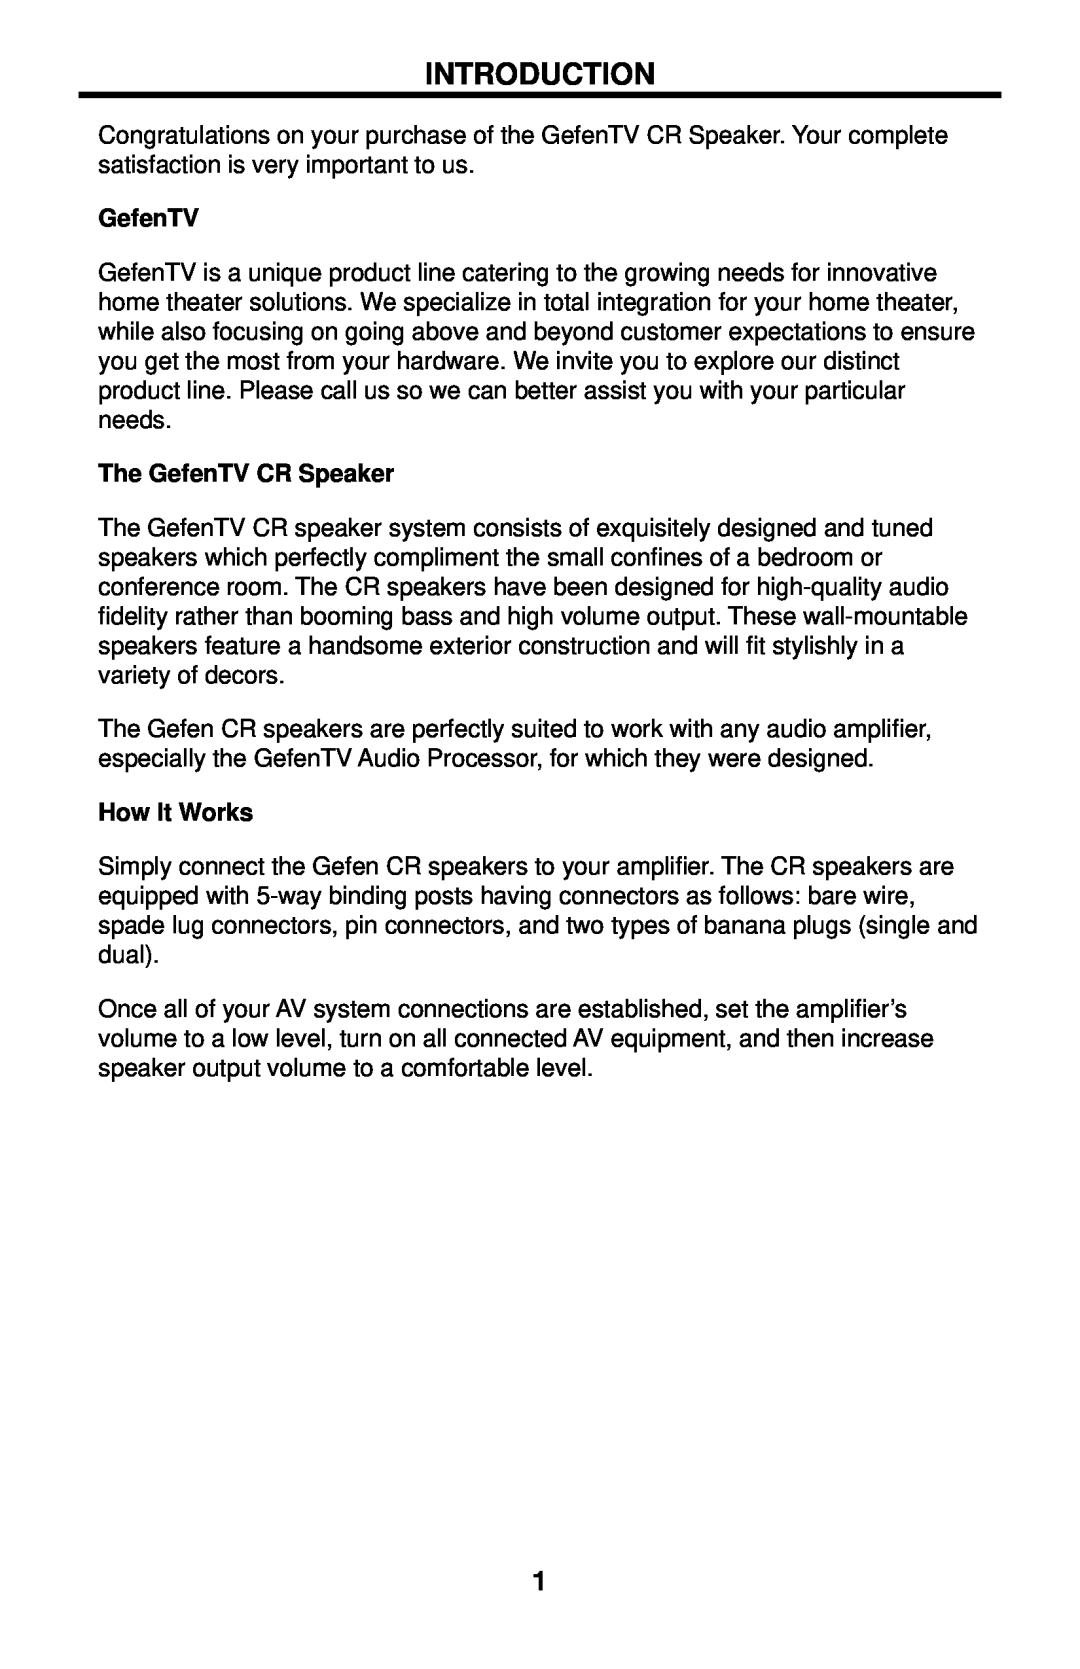 Gefen GTV-CR-5SP, GTV-CR-3SP, GTV-CR-2SP user manual Introduction, The GefenTV CR Speaker, How It Works 